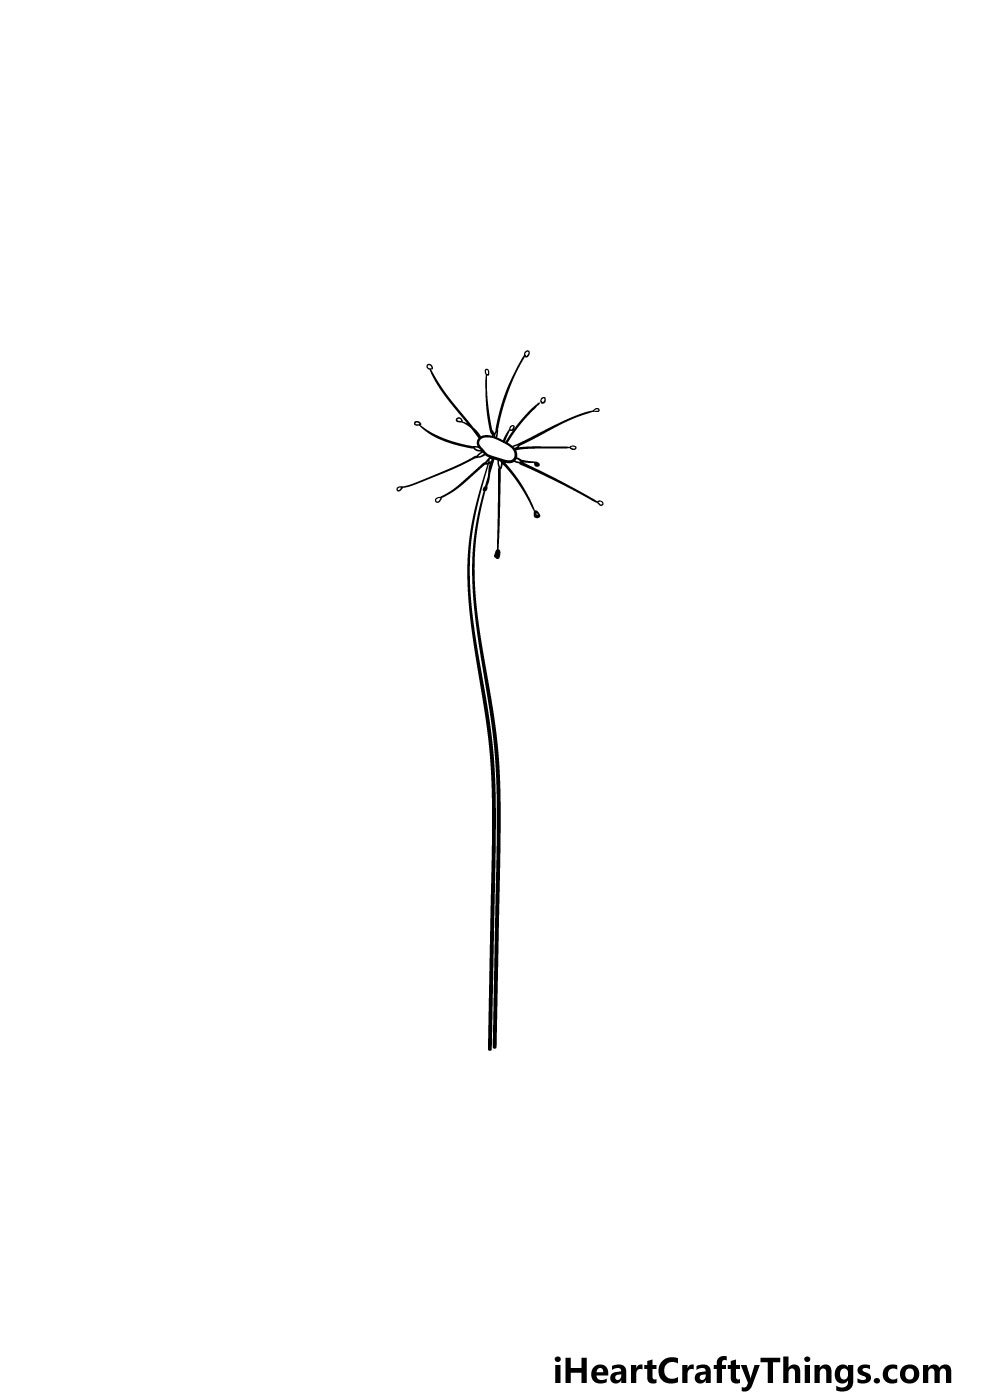 drawing a dandelion step 1